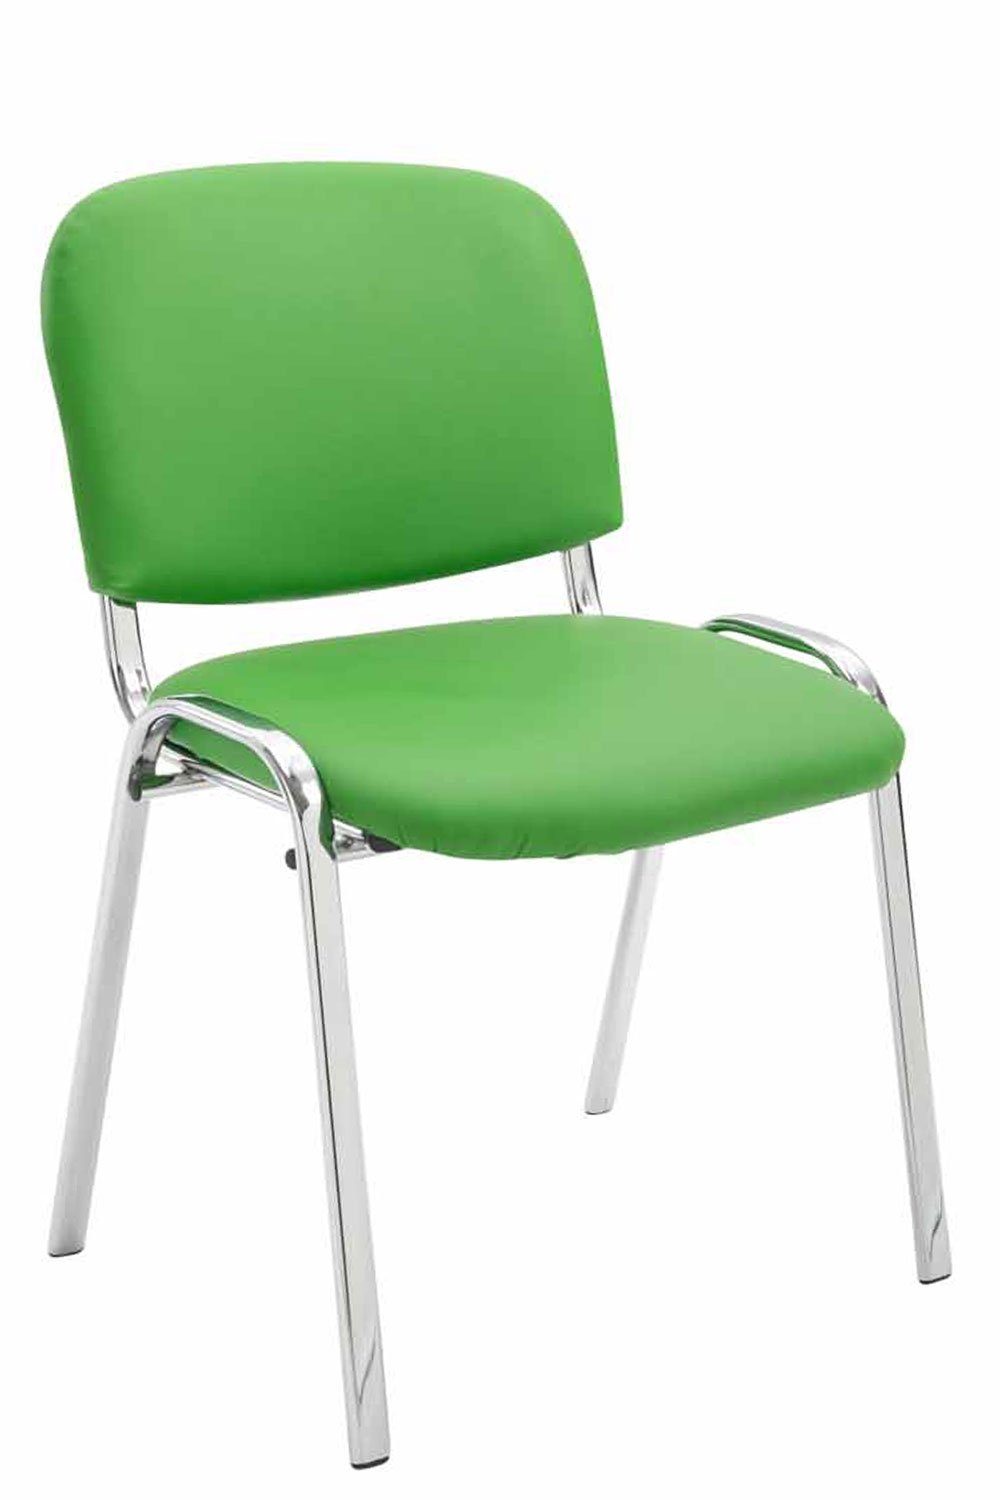 - Warteraumstuhl Sitzfläche: Kunstleder Keen Polsterung Metall mit Gestell: Konferenzstuhl TPFLiving hochwertiger - Besucherstuhl Messestuhl), (Besprechungsstuhl - grün - chrom